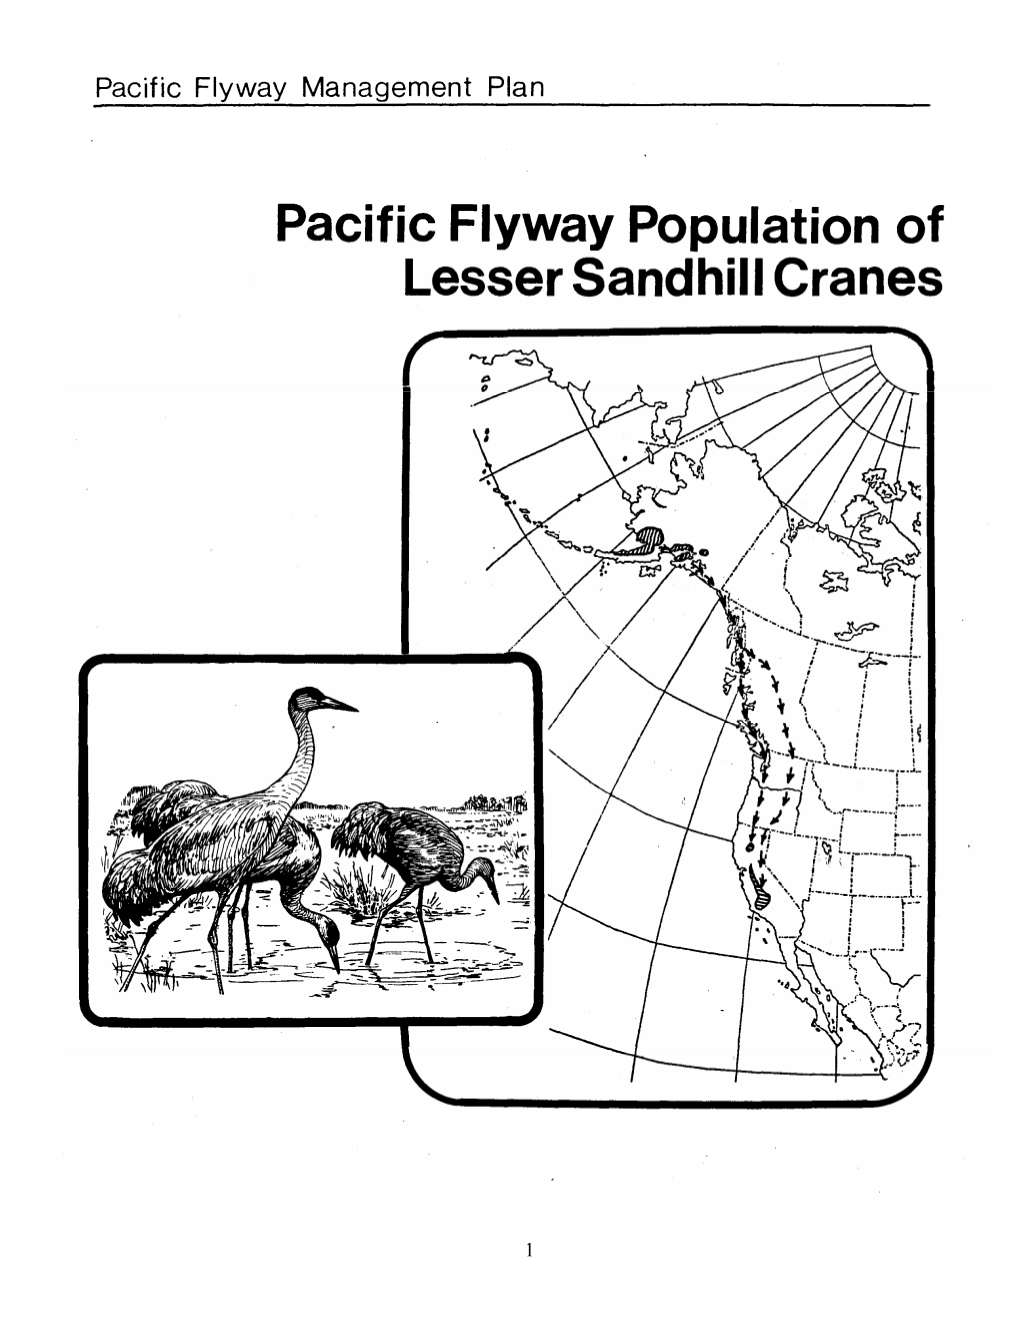 Pacific Flyway Population of Lesser Sandhill Cranes